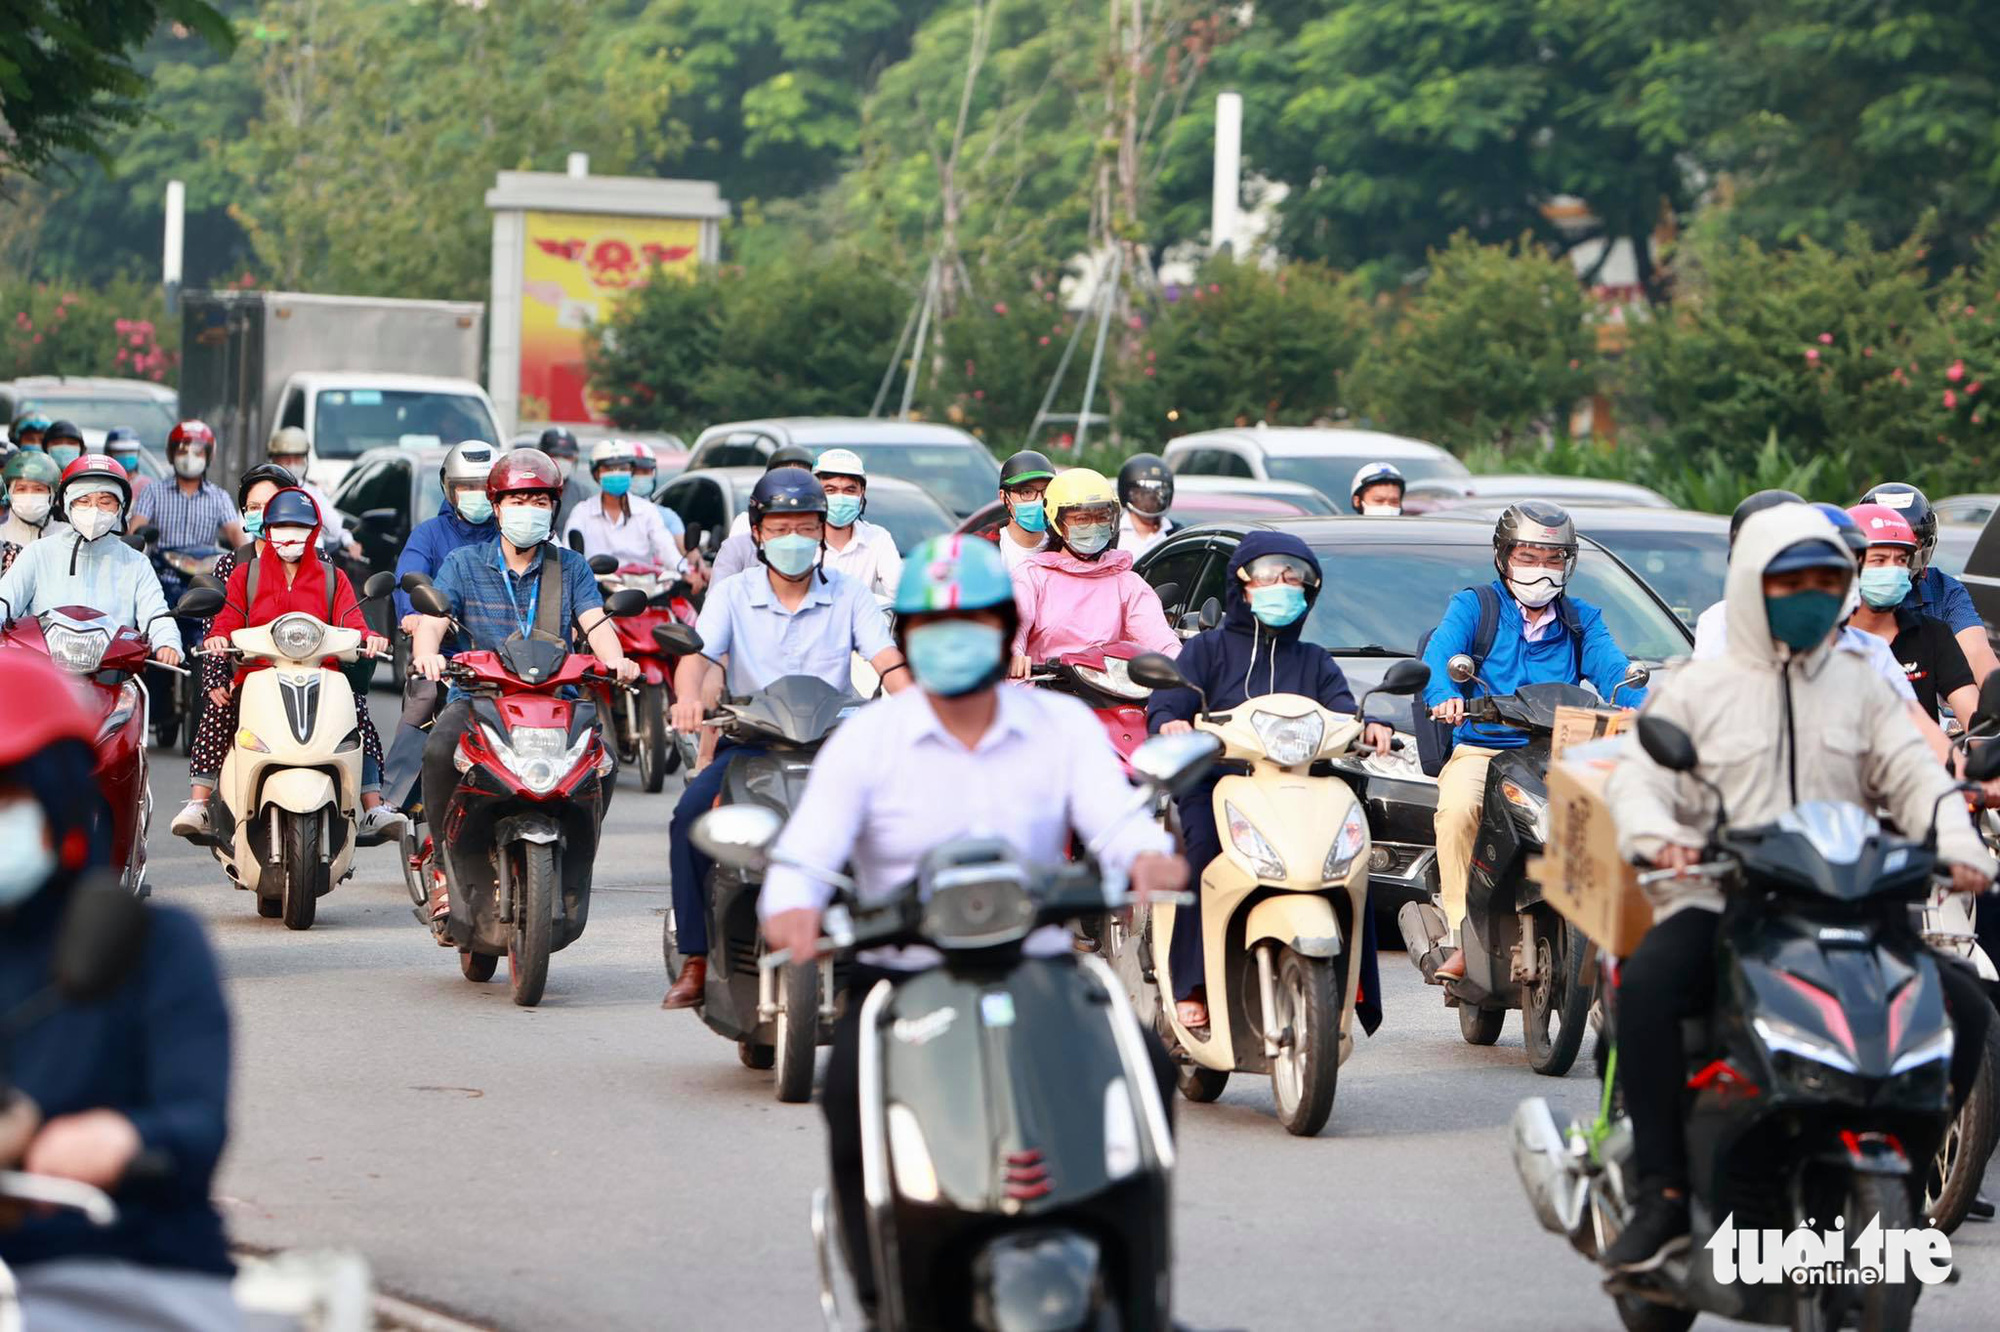 Vehicles crowd a street in Hanoi, September 21, 2021. Photo: Tuoi Tre